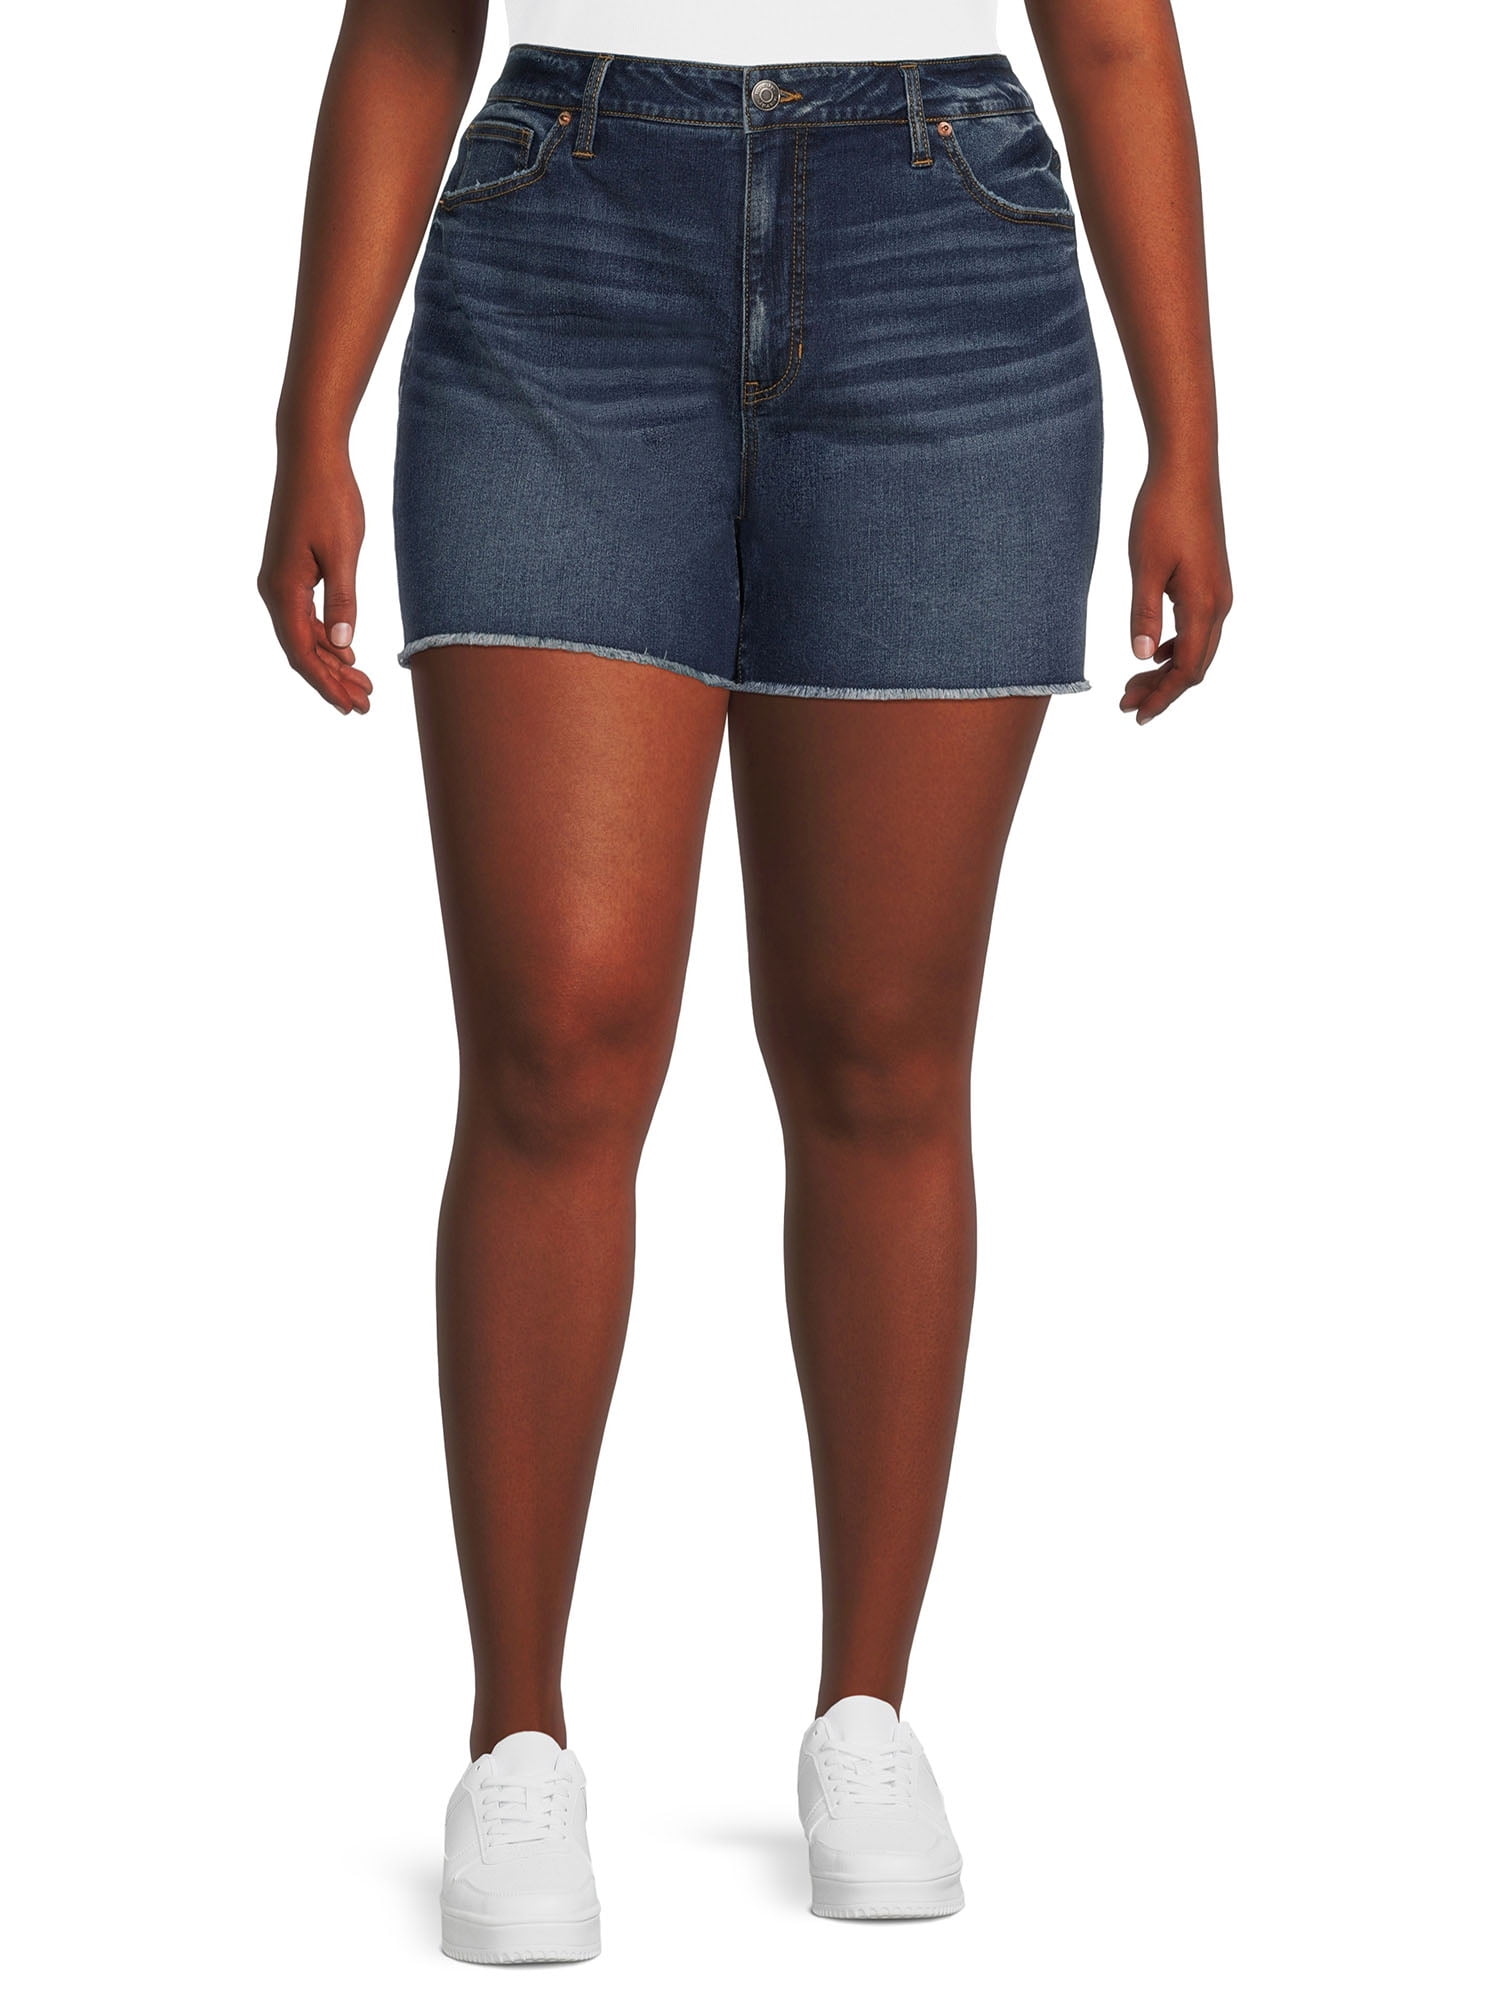 Terra & Sky Women's Plus Size High Rise Cut Off Shorts - Walmart.com